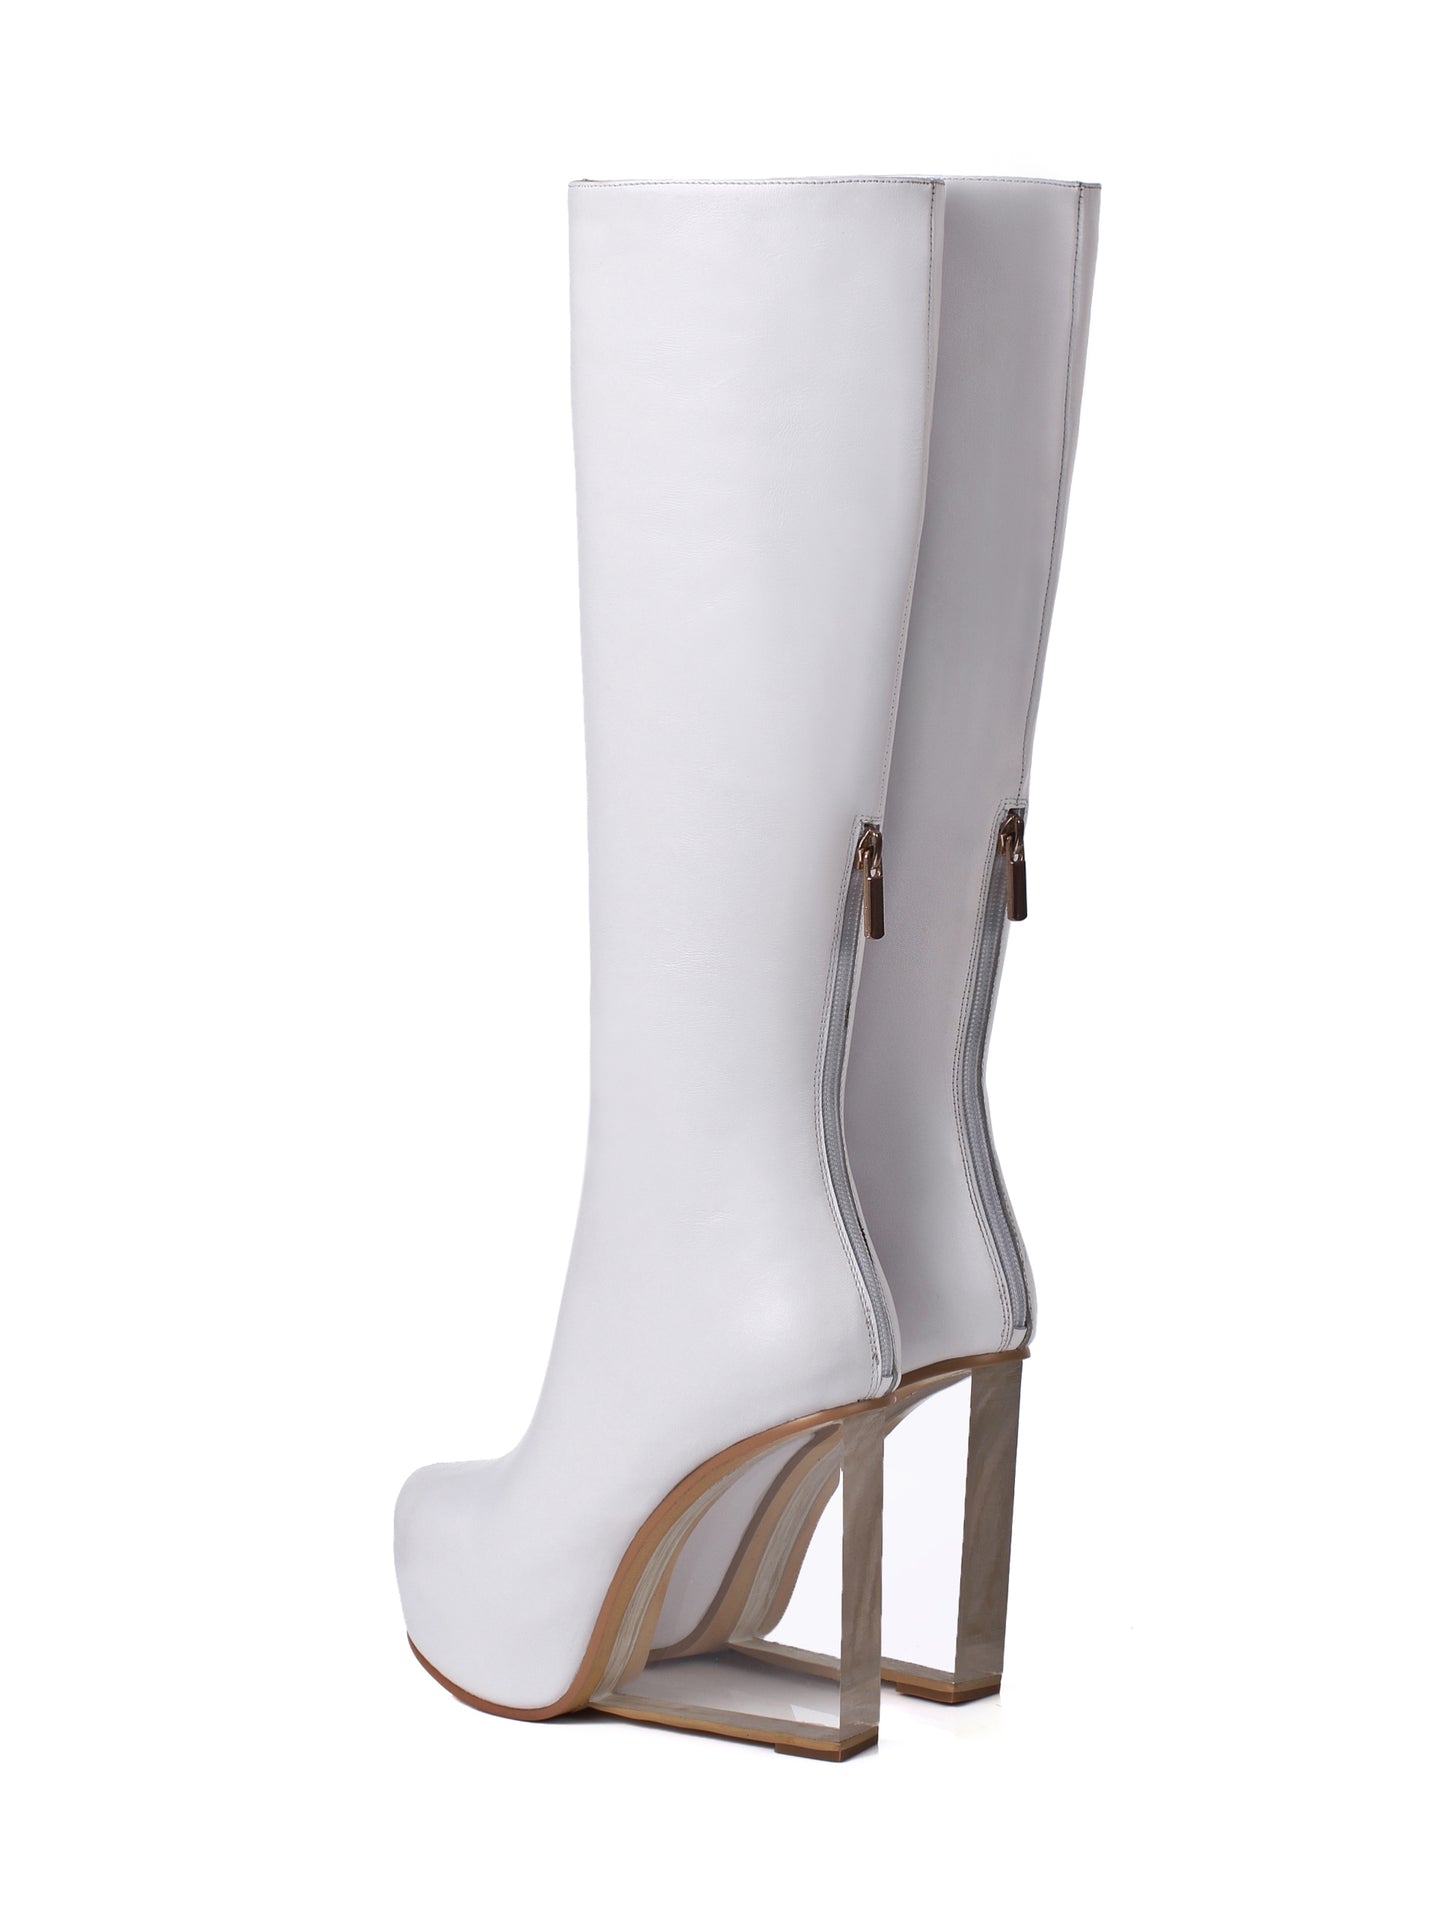 TinaCus Women's Handmade Genuine Leather Round Toe Transparent High Heel Half Zip Up Knee High Boots with Platform